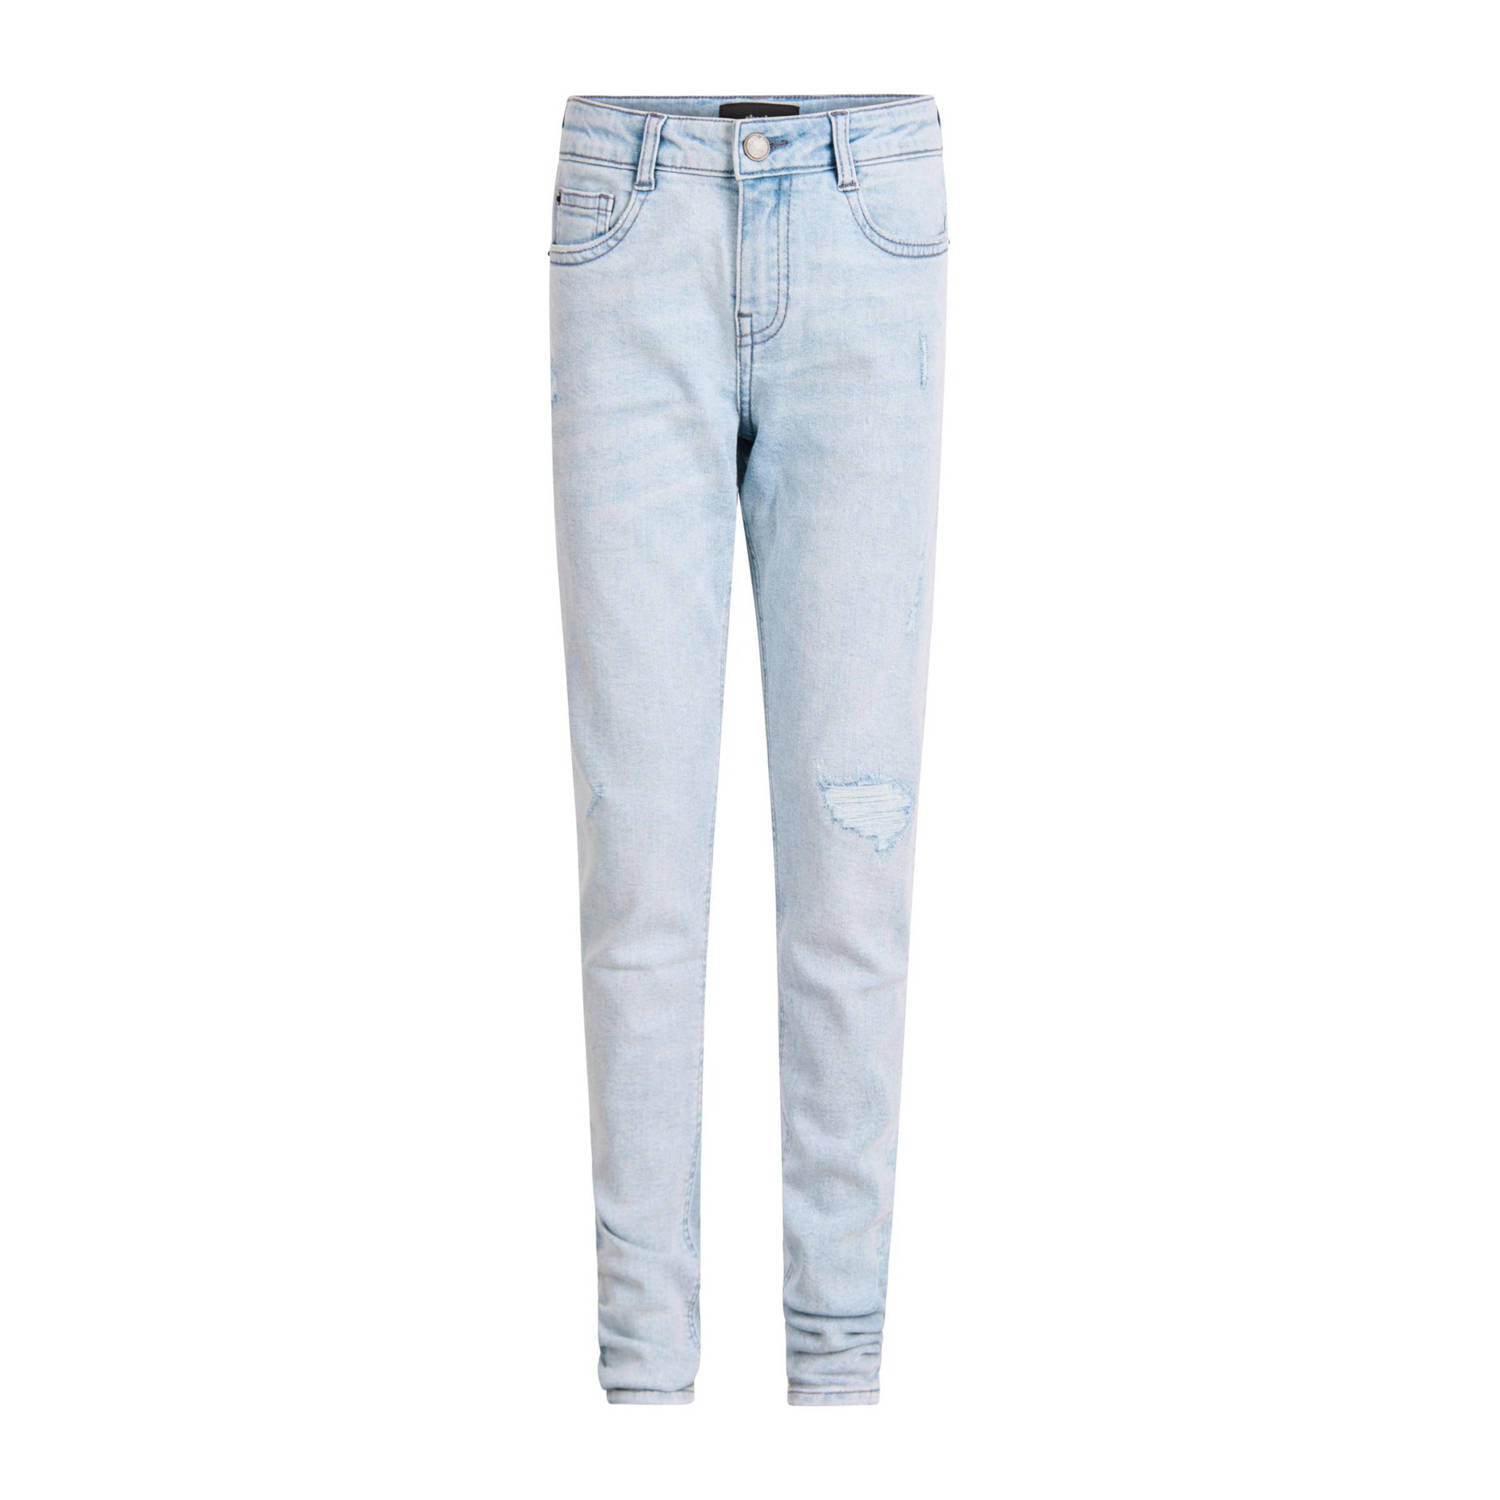 Shoeby skinny jeans light blue denim Blauw Jongens Stretchdenim 110